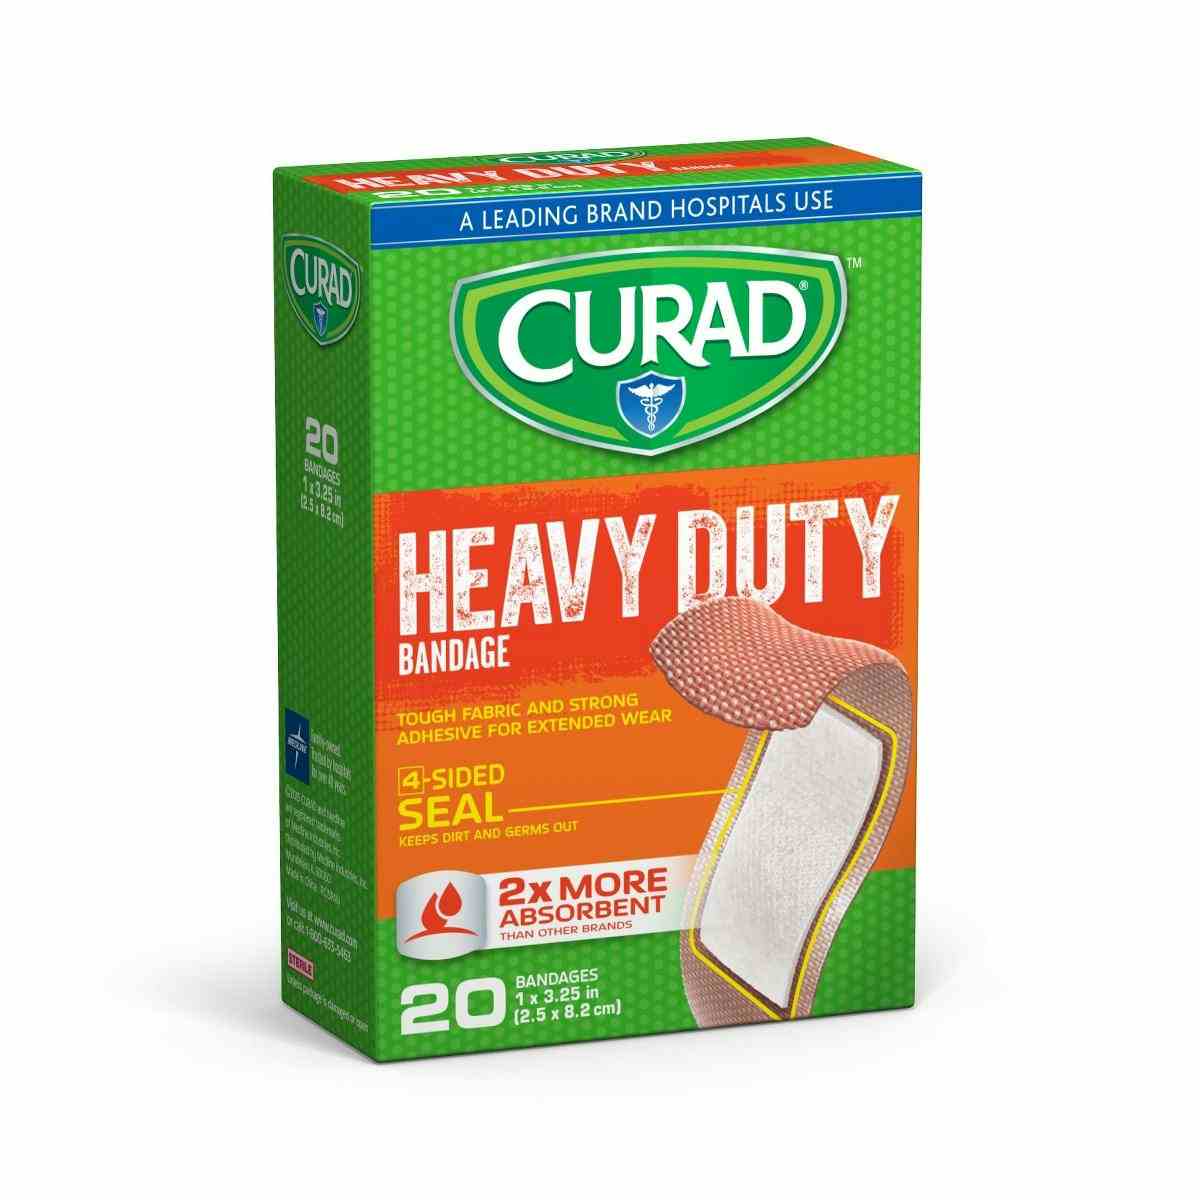 Curad Heavy Duty Bandages, CUR14925RBH, 1" X 3.25" - Box of 20